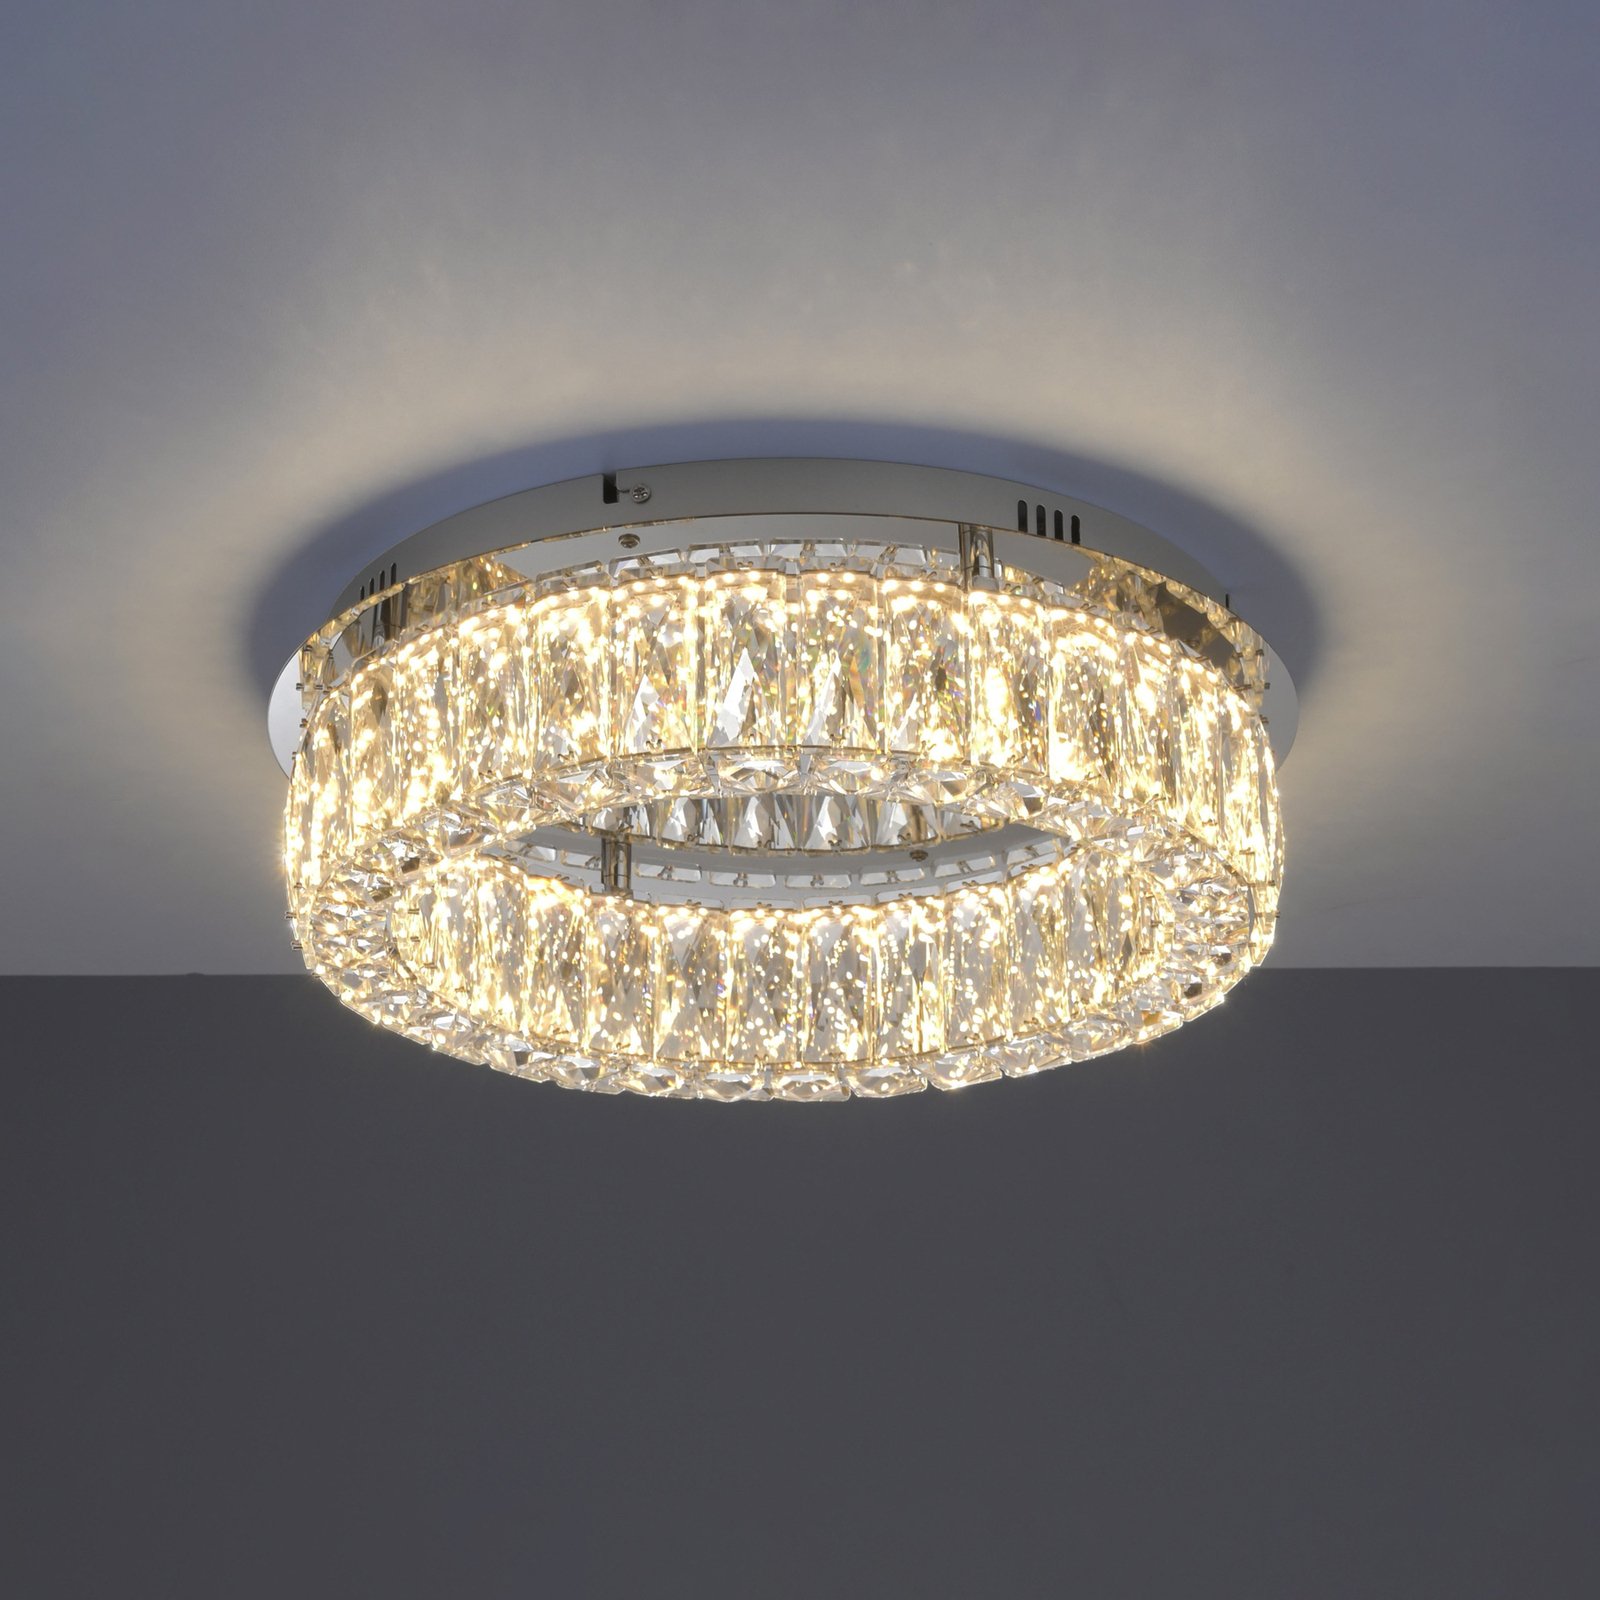 JUST LIGHT. Kulunka LED ceiling light, iron, crystal glass